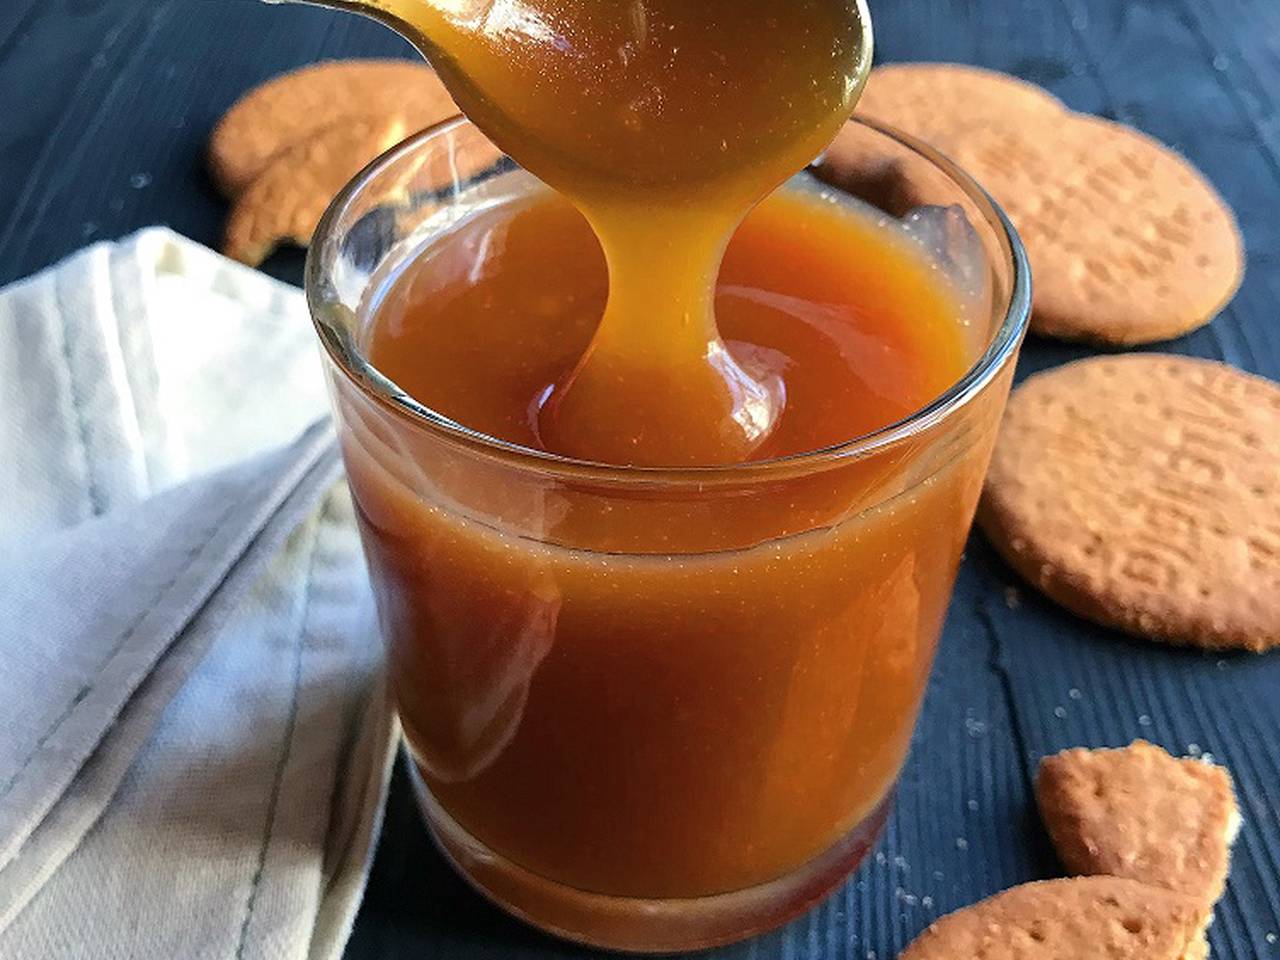 Easy Caramel Sauce